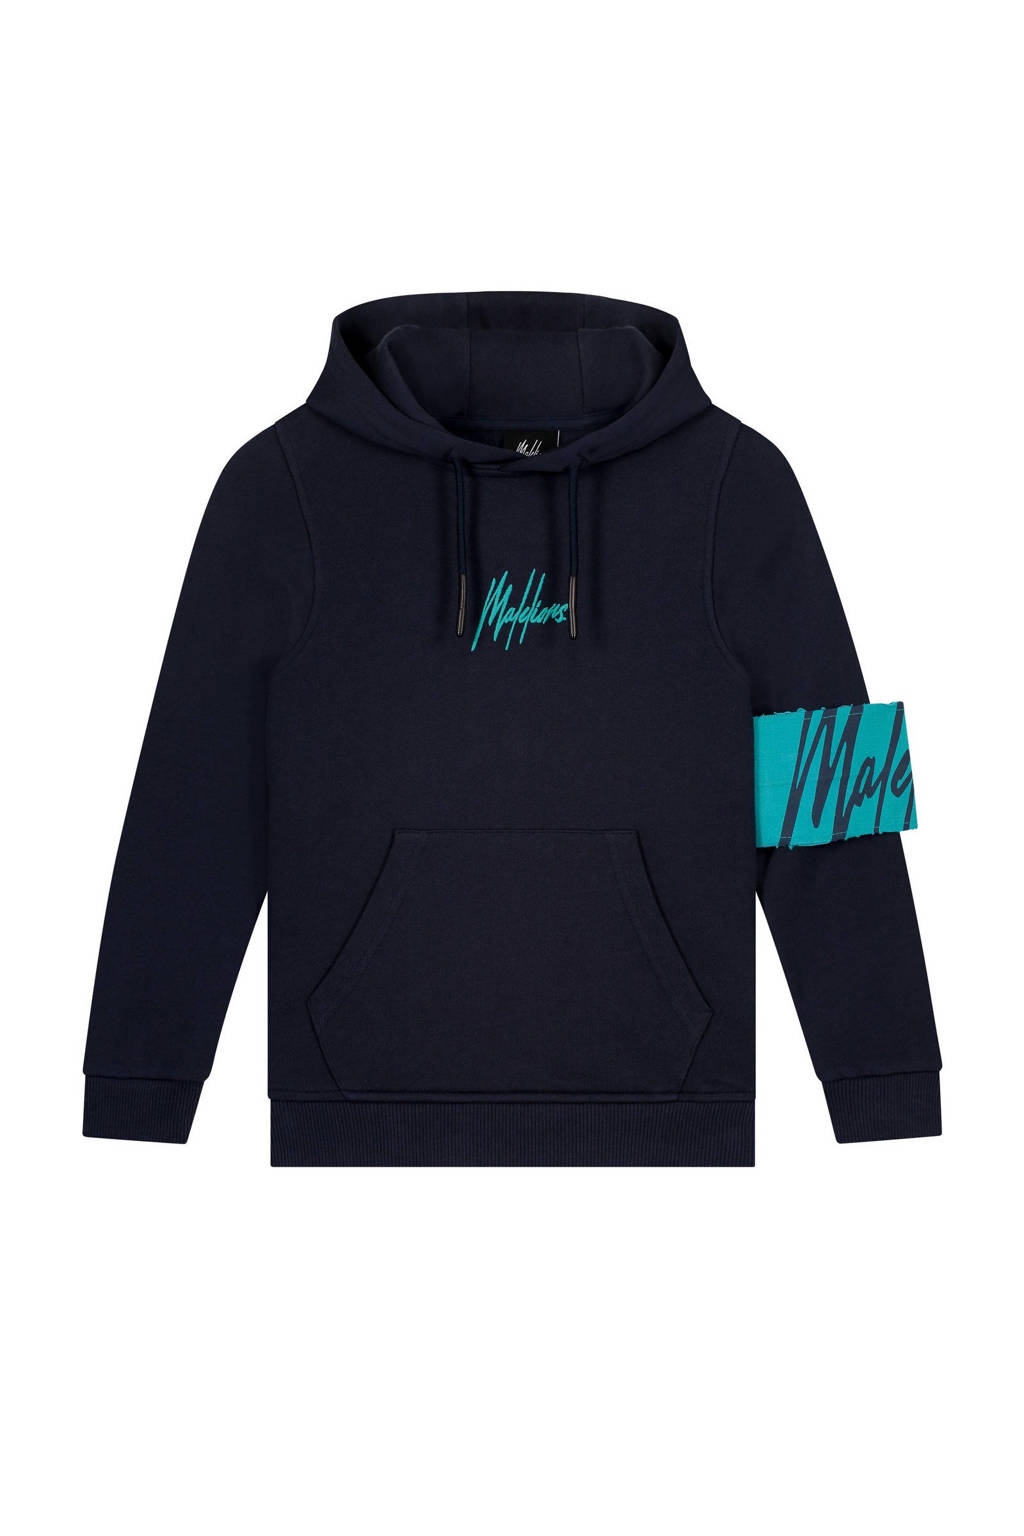 Malelions hoodie met logo donkerblauw/turquoise